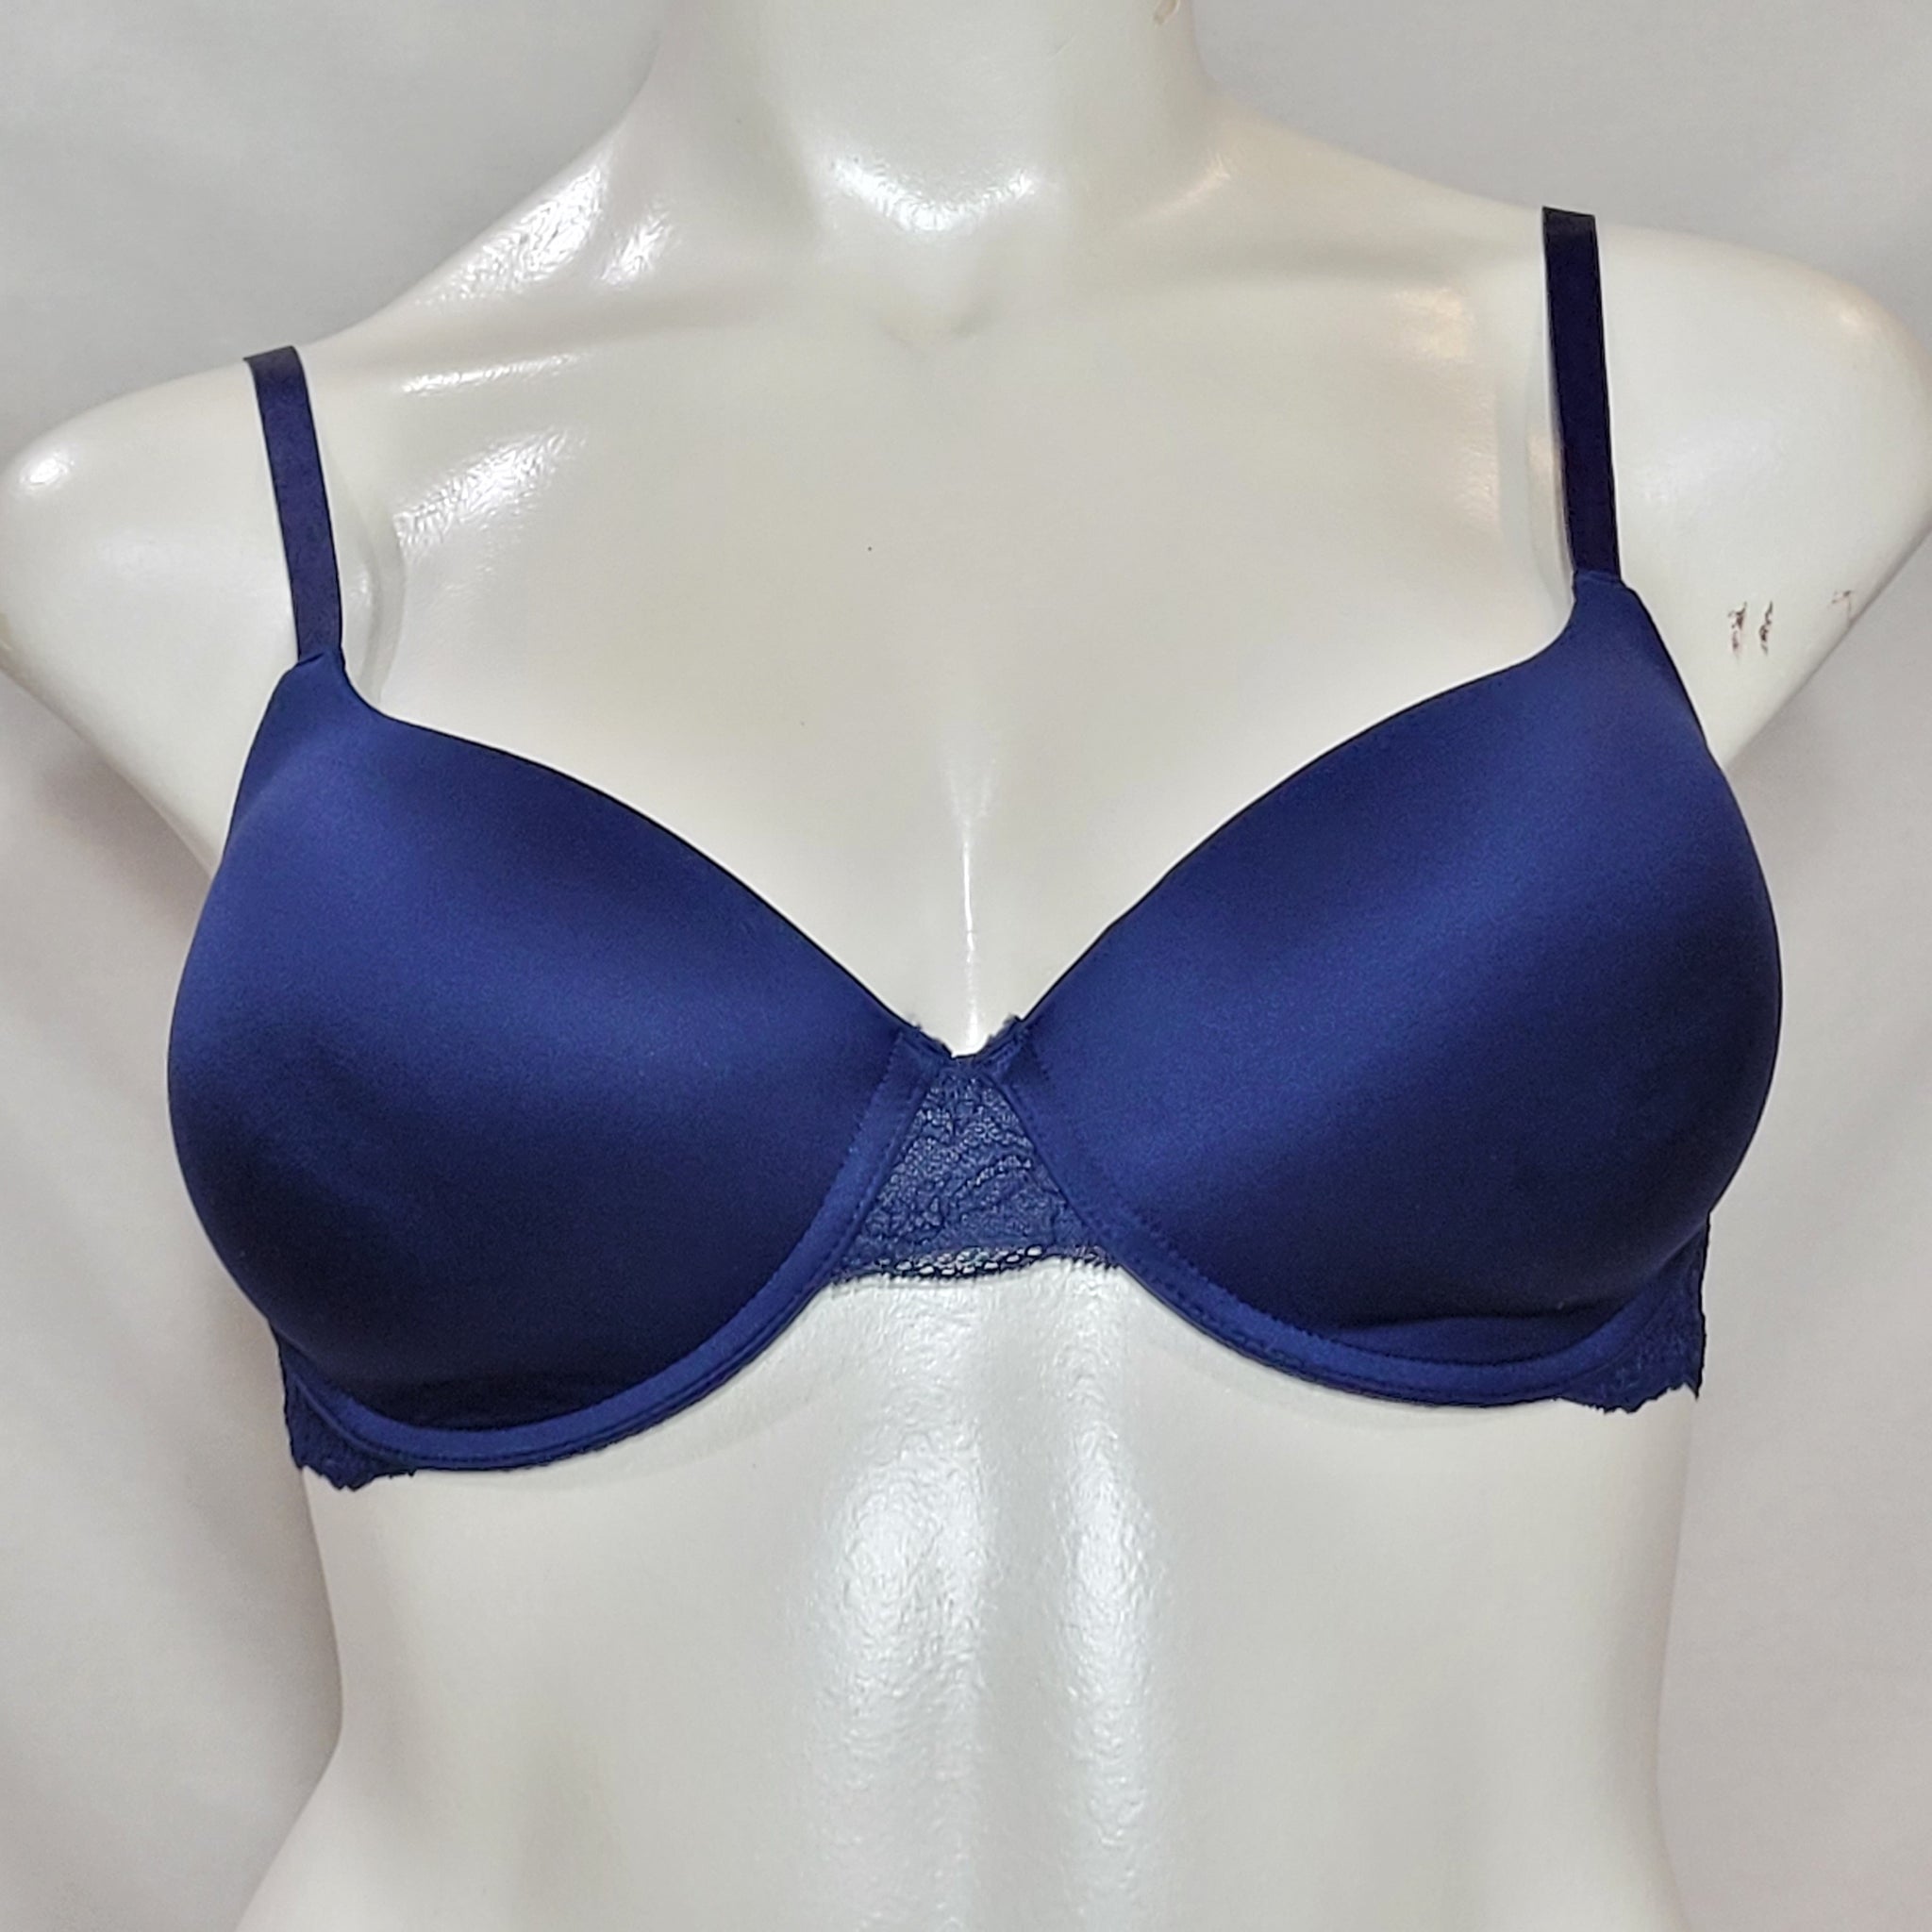 Gilligan O'Malley Bra/Bralette Size XL Floral Lace Powder Blue